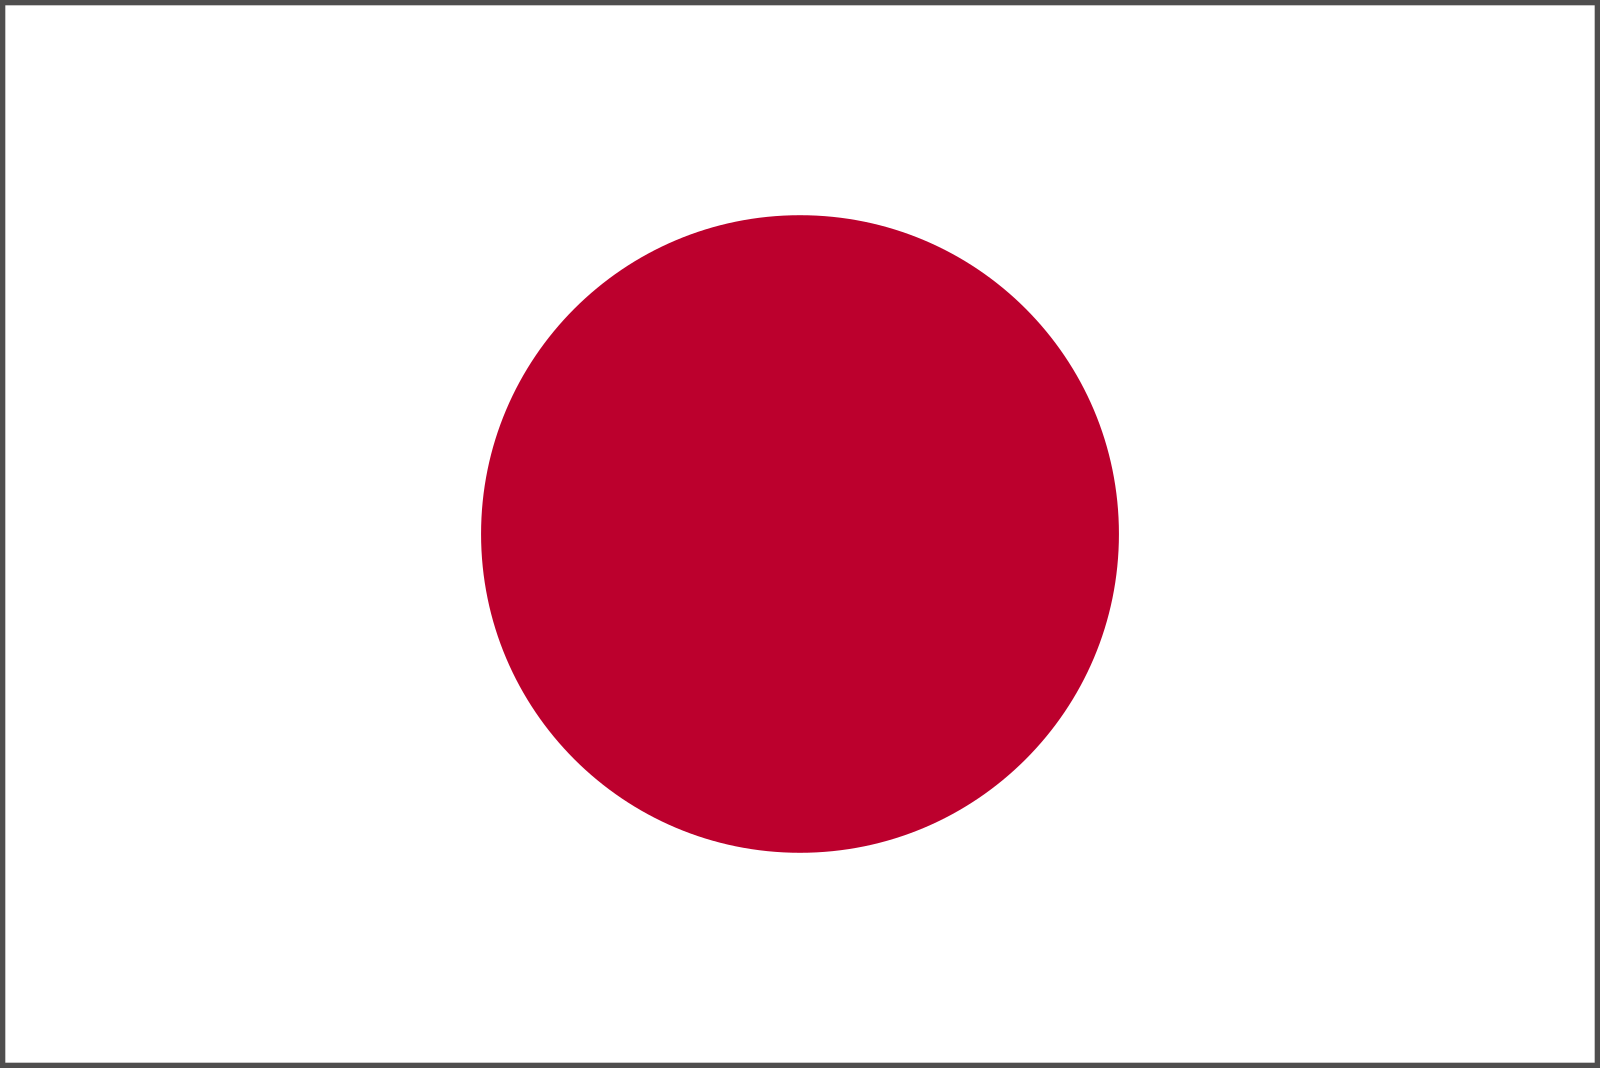 Bordered Japan flag.